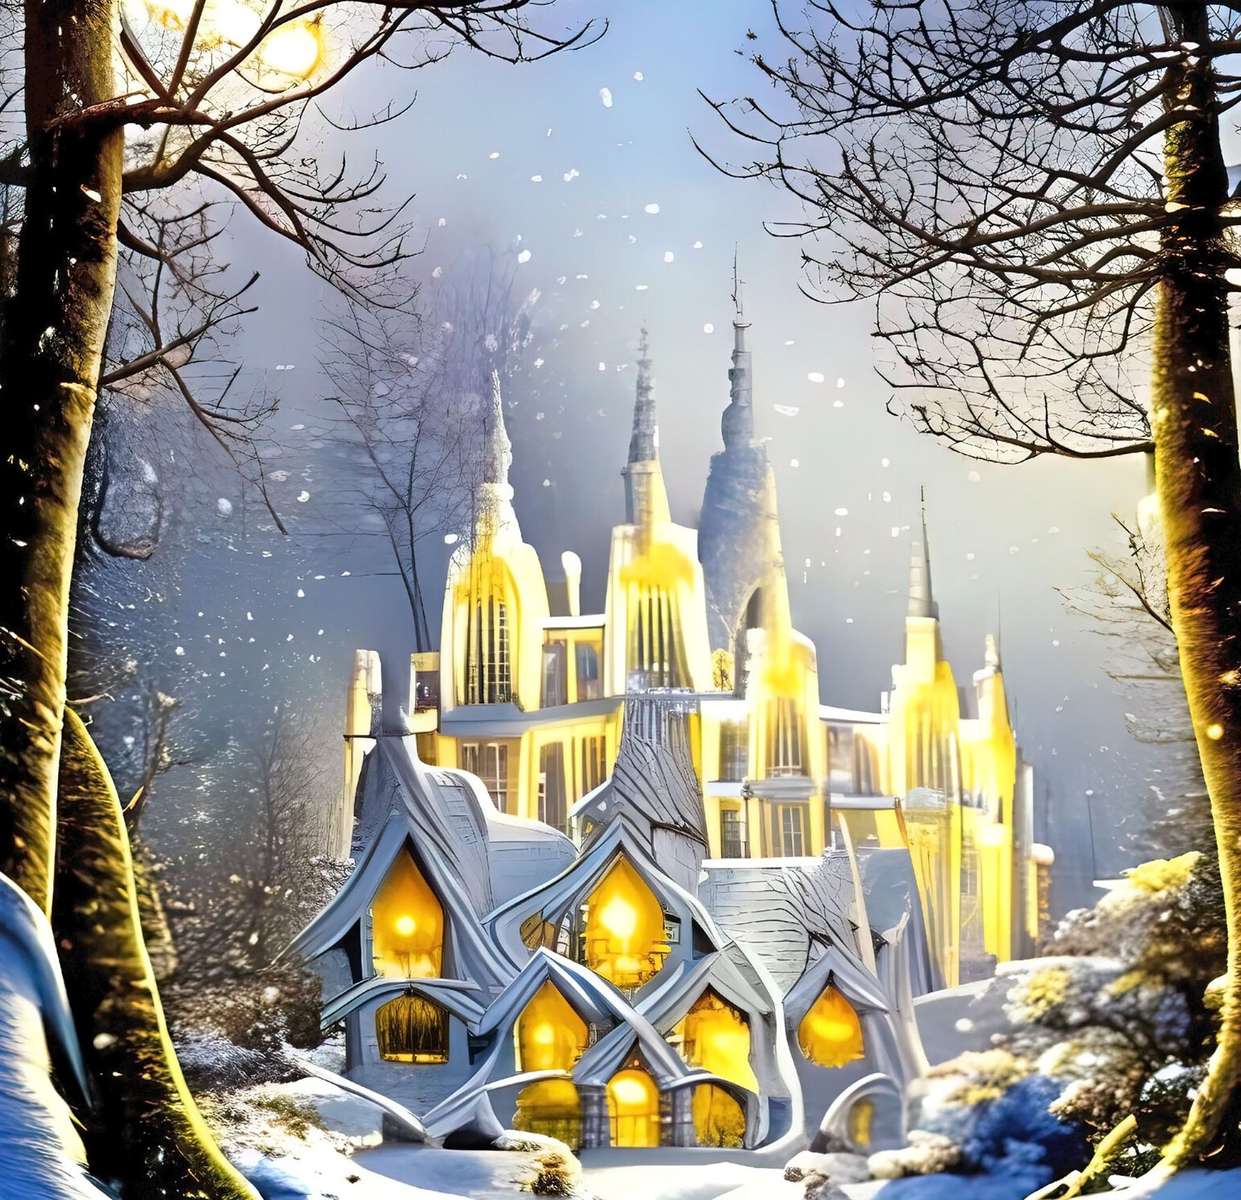 Illuminated castle in winter online puzzle